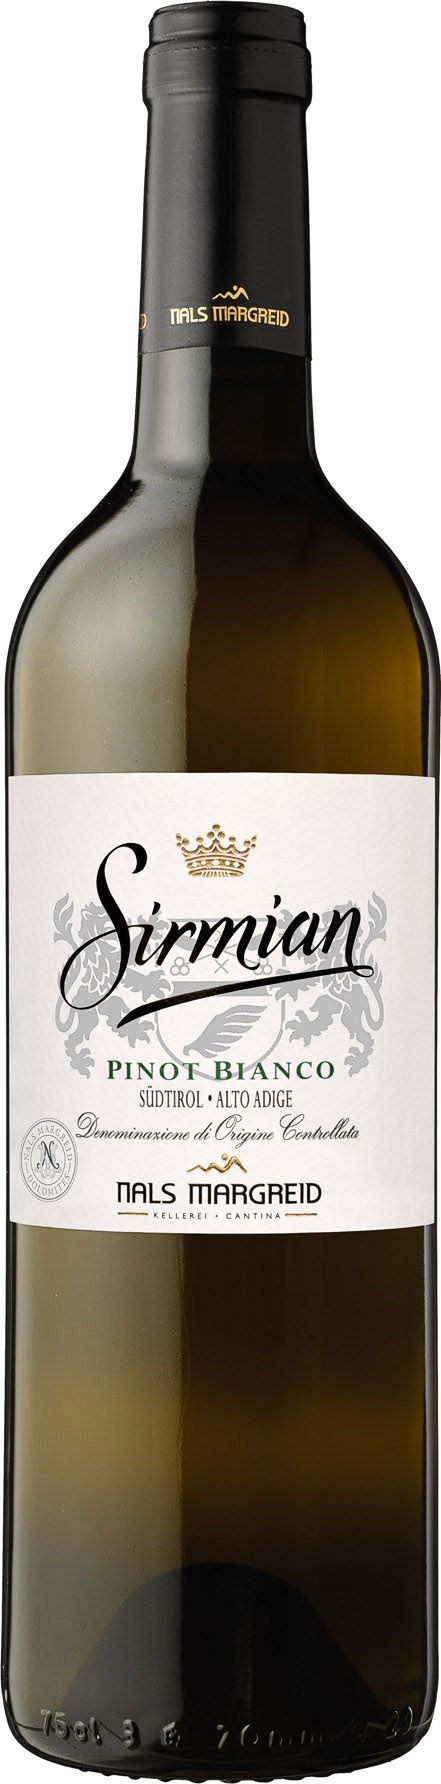 Nals Margreid, Sirmian Pinot Blanco, 2015